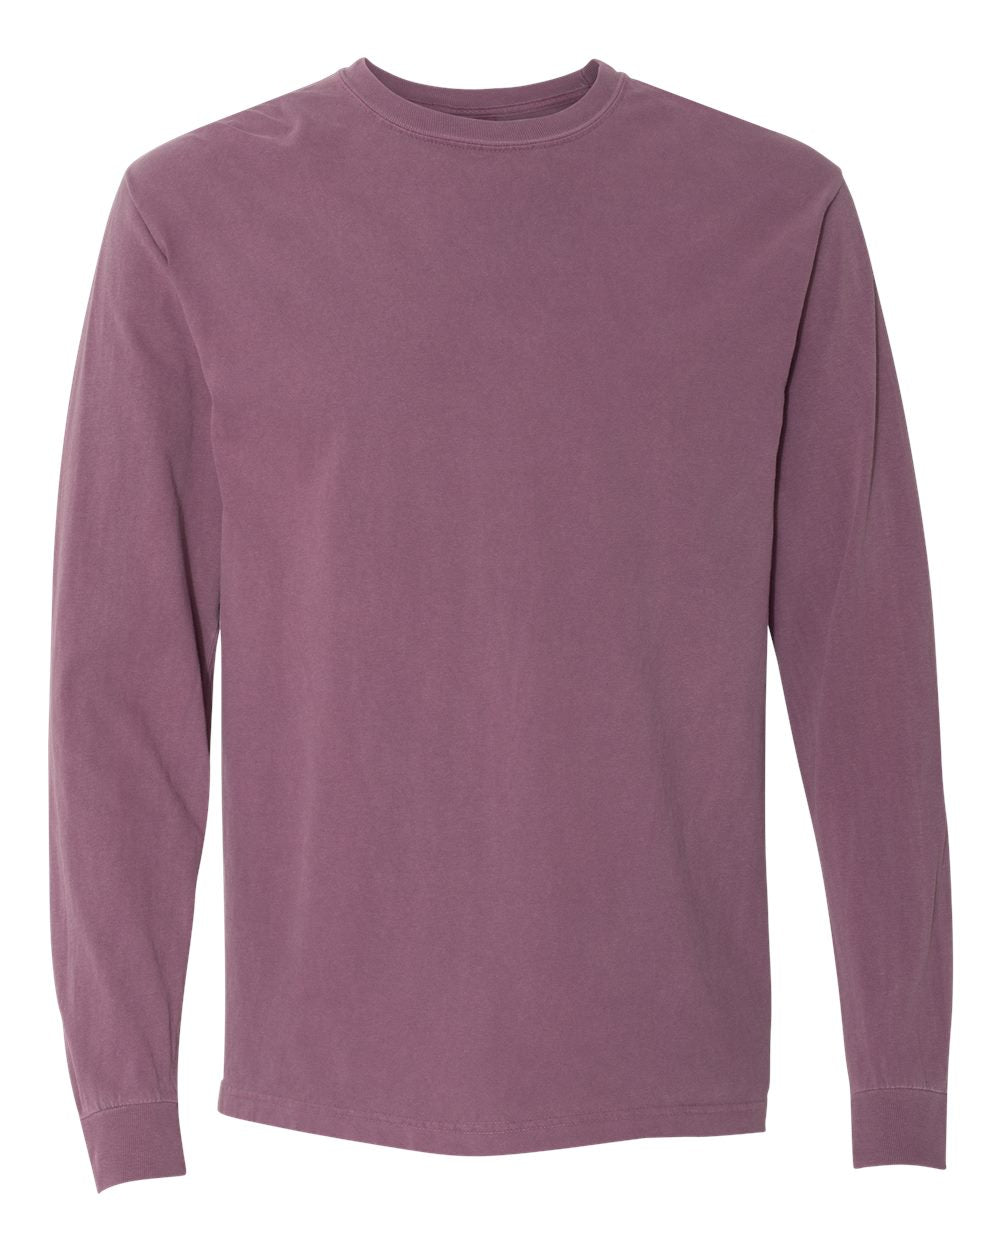 Comfort Colors Heavyweight Long Sleeve T-Shirt Size 2XLarge